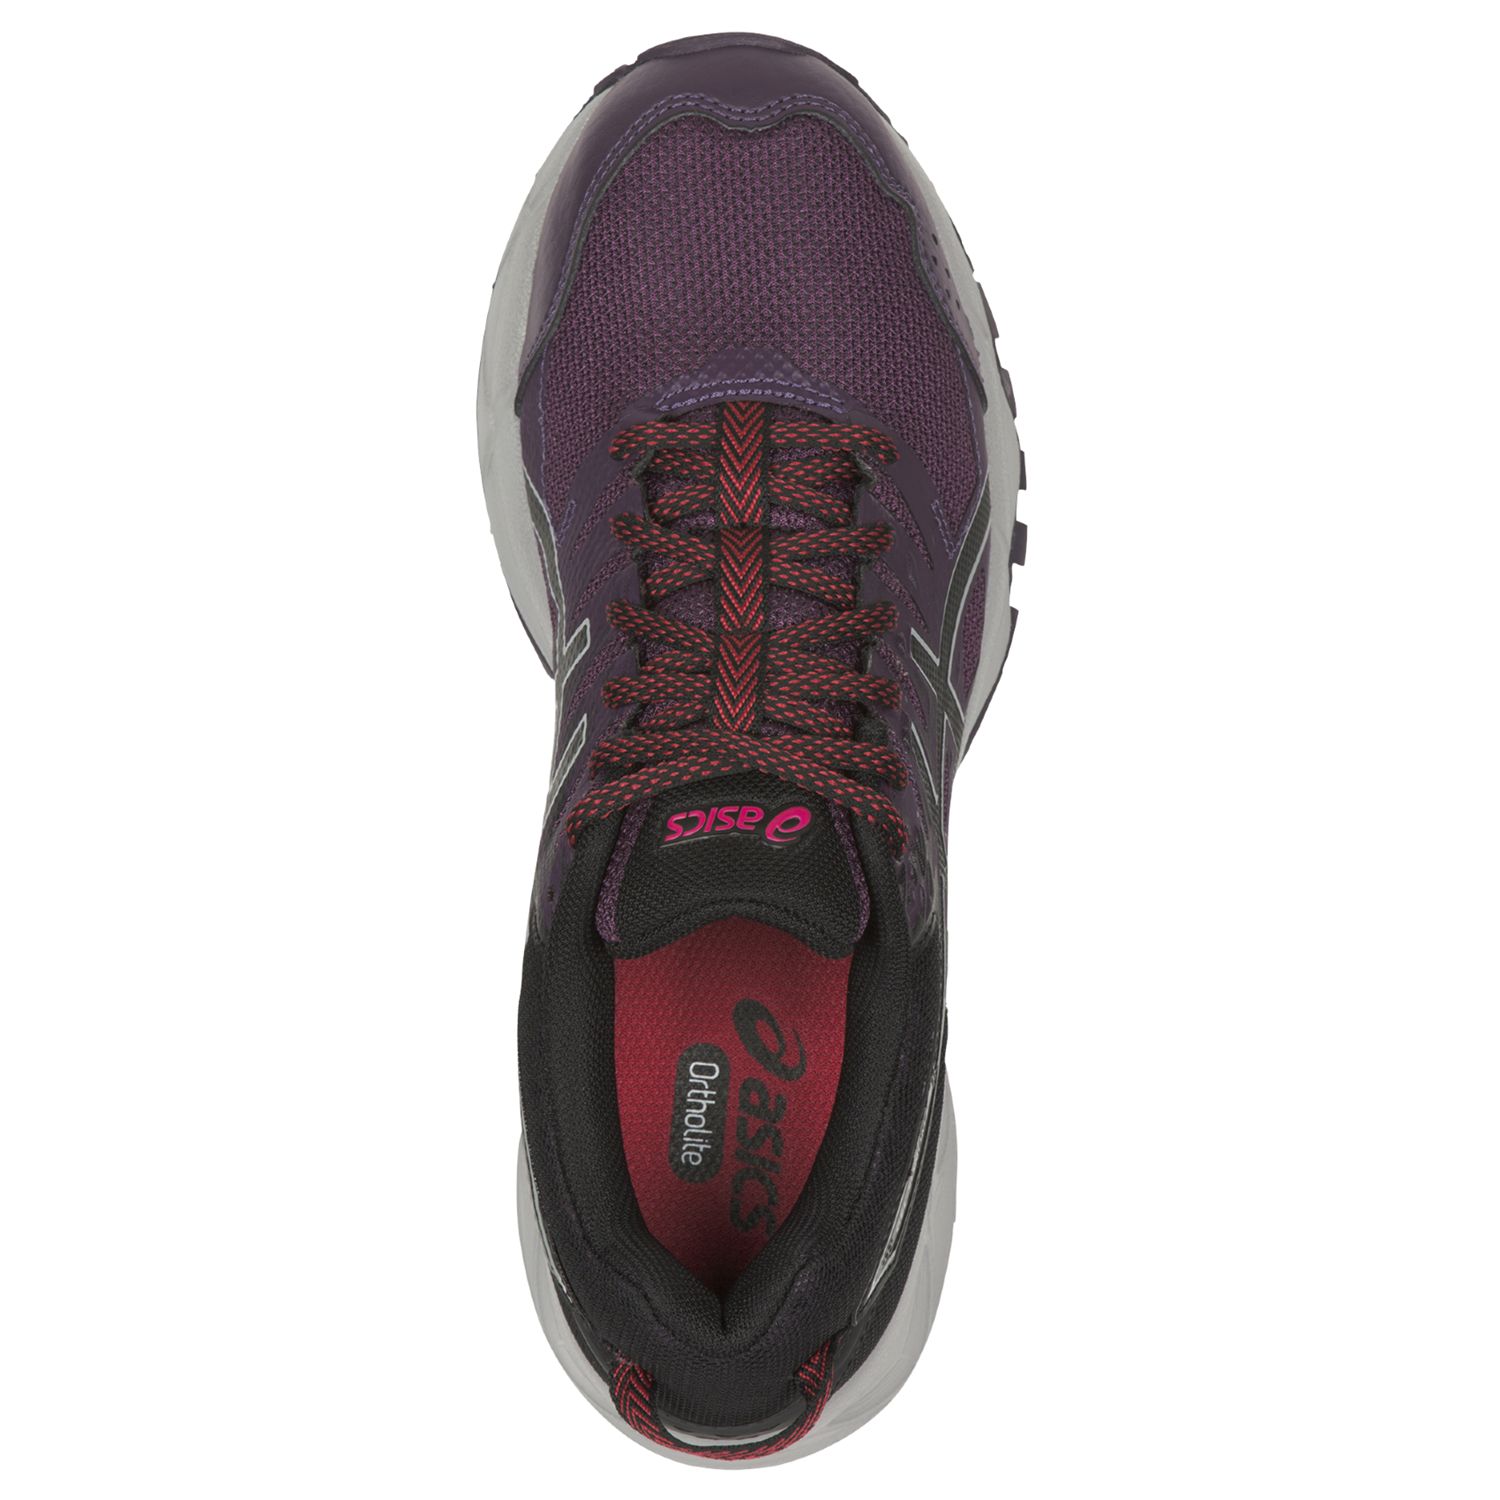 Asics GEL-SONOMA 3 Women's Trail Running Shoes, Purple/Black